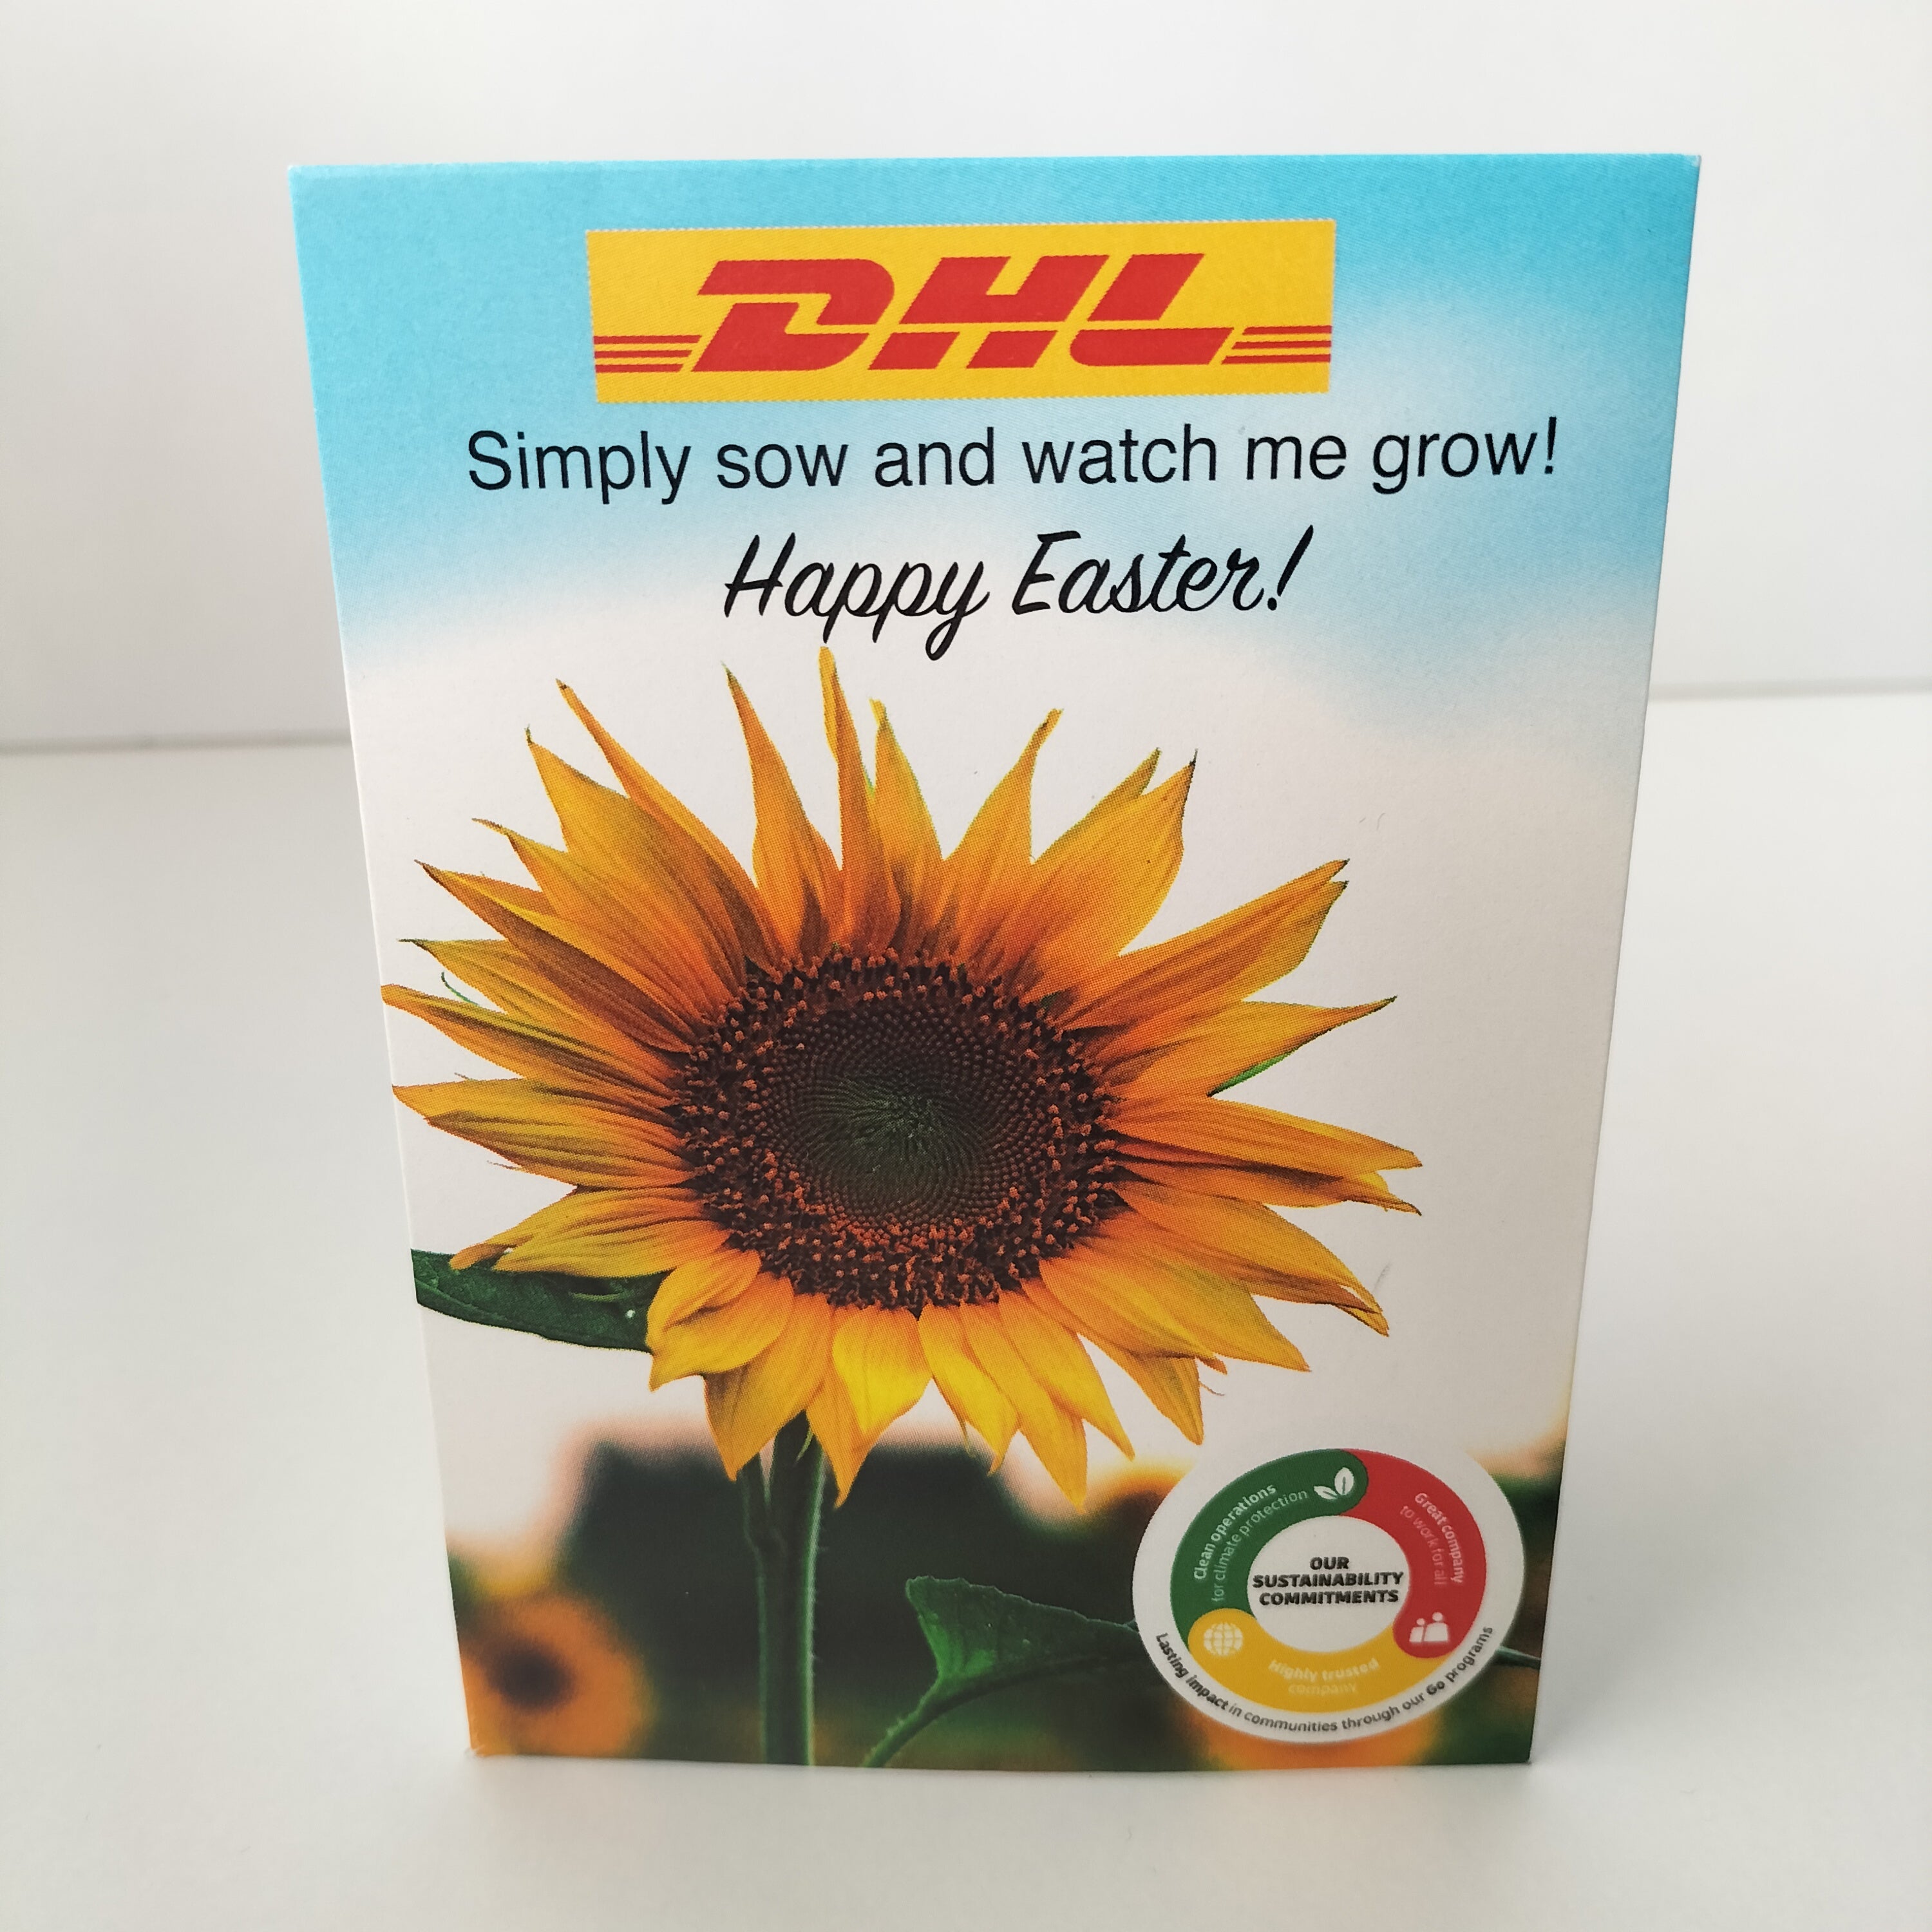 DHL custom corporate seed pack